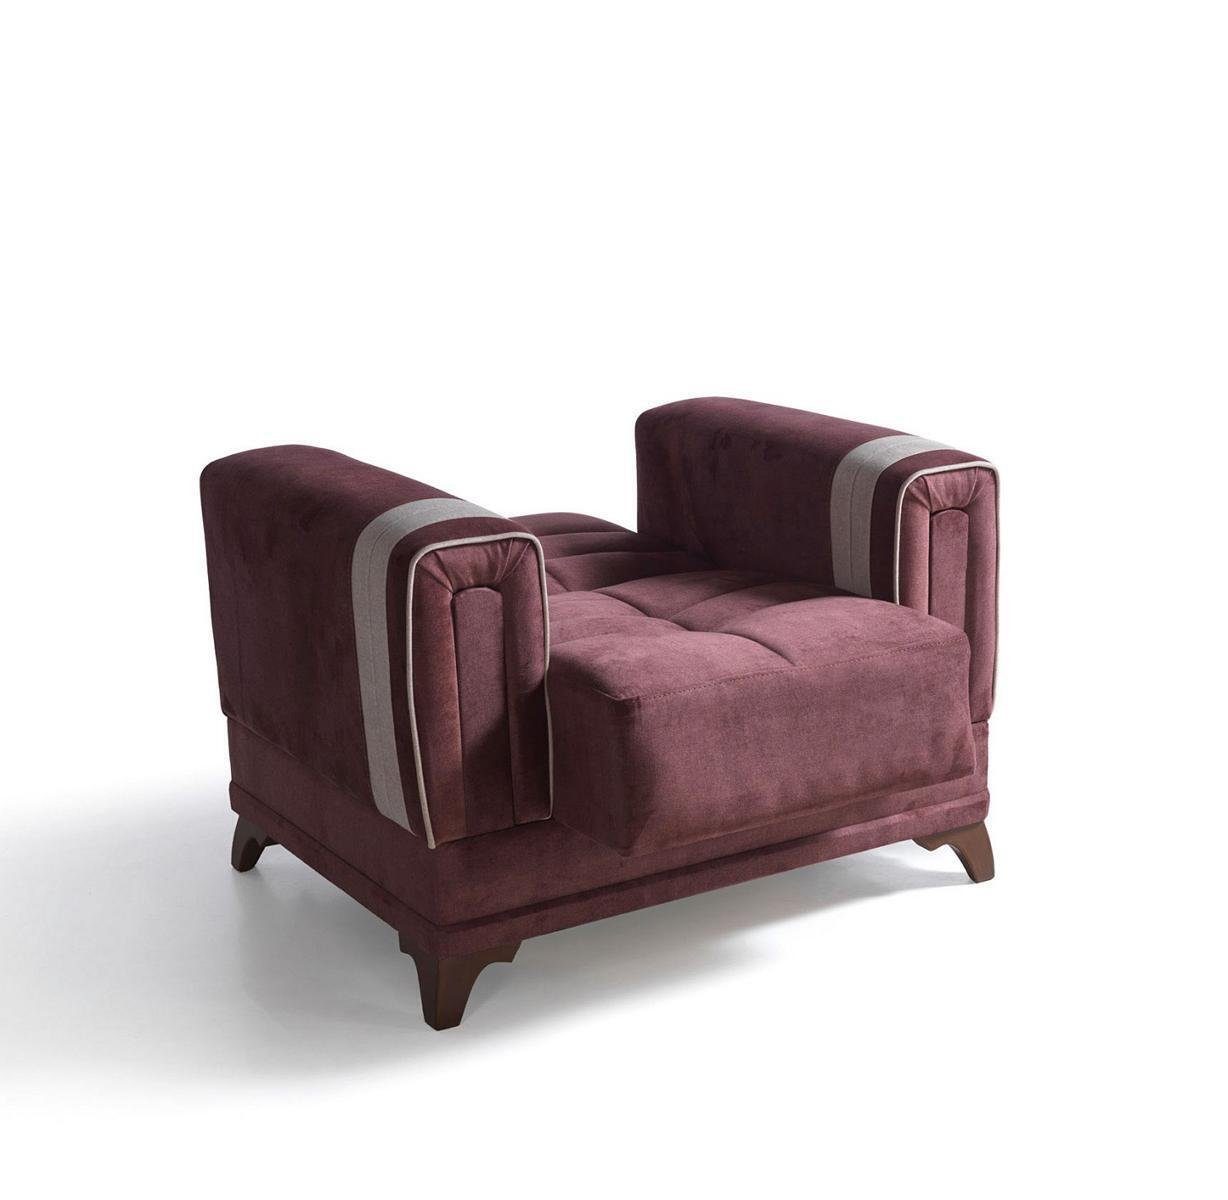 Textil Sessel Sessel Europe Lounge Luxus JVmoebel Made Sessel Design In Relax Rosa Club (Sessel), Sitzer